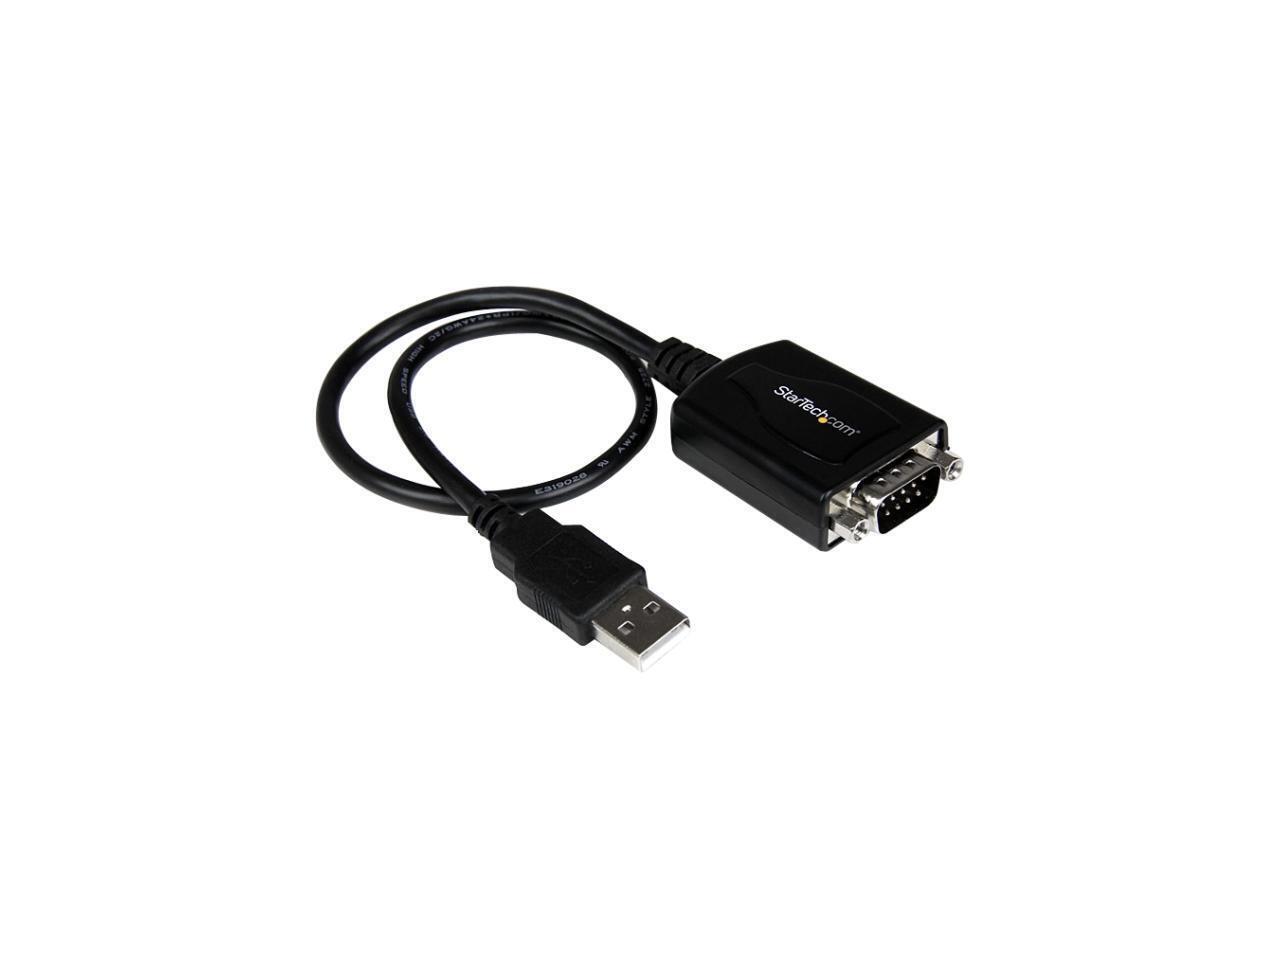 StarTech.com ICUSB232PRO USB to Serial Adapter - Prolific PL-2303 - COM Port